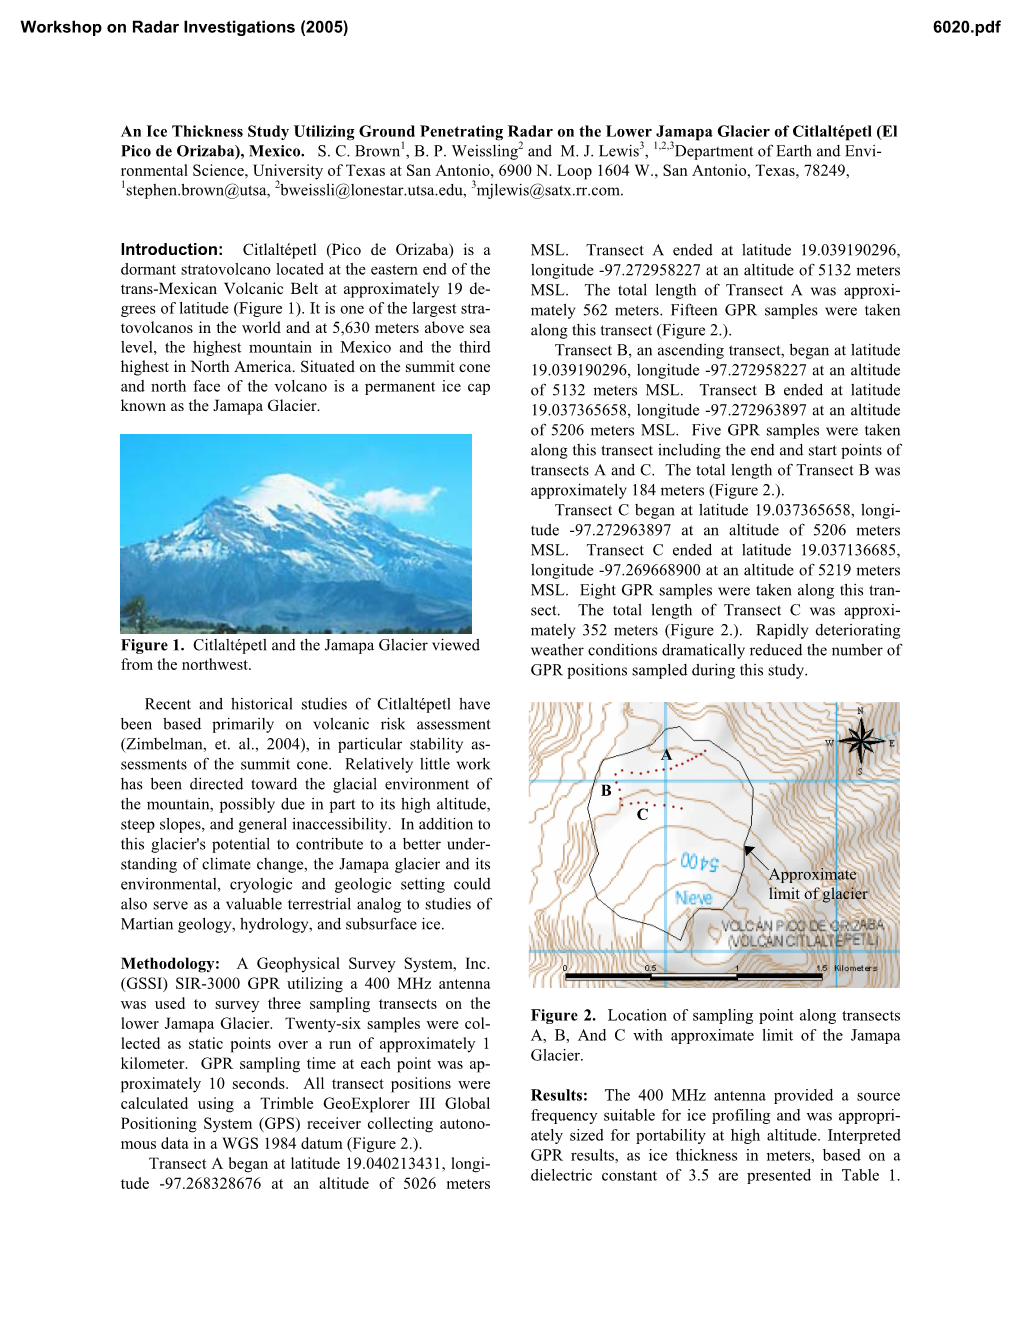 An Ice Thickness Study Utilizing Ground Penetrating Radar on the Lower Jamapa Glacier of Citlaltépetl (El Pico De Orizaba), Mexico